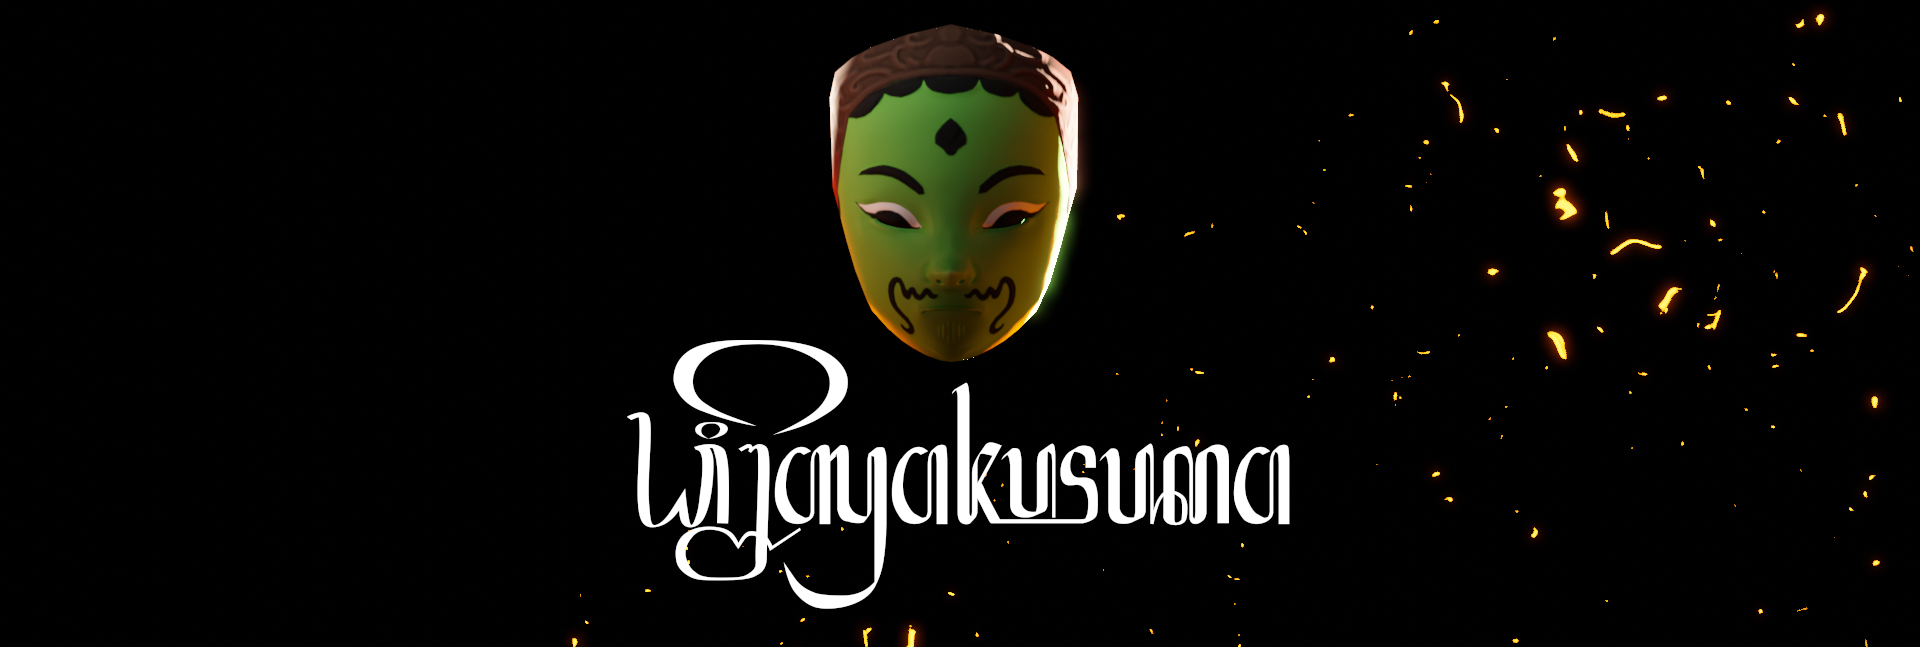 Wijayakusuma - the game